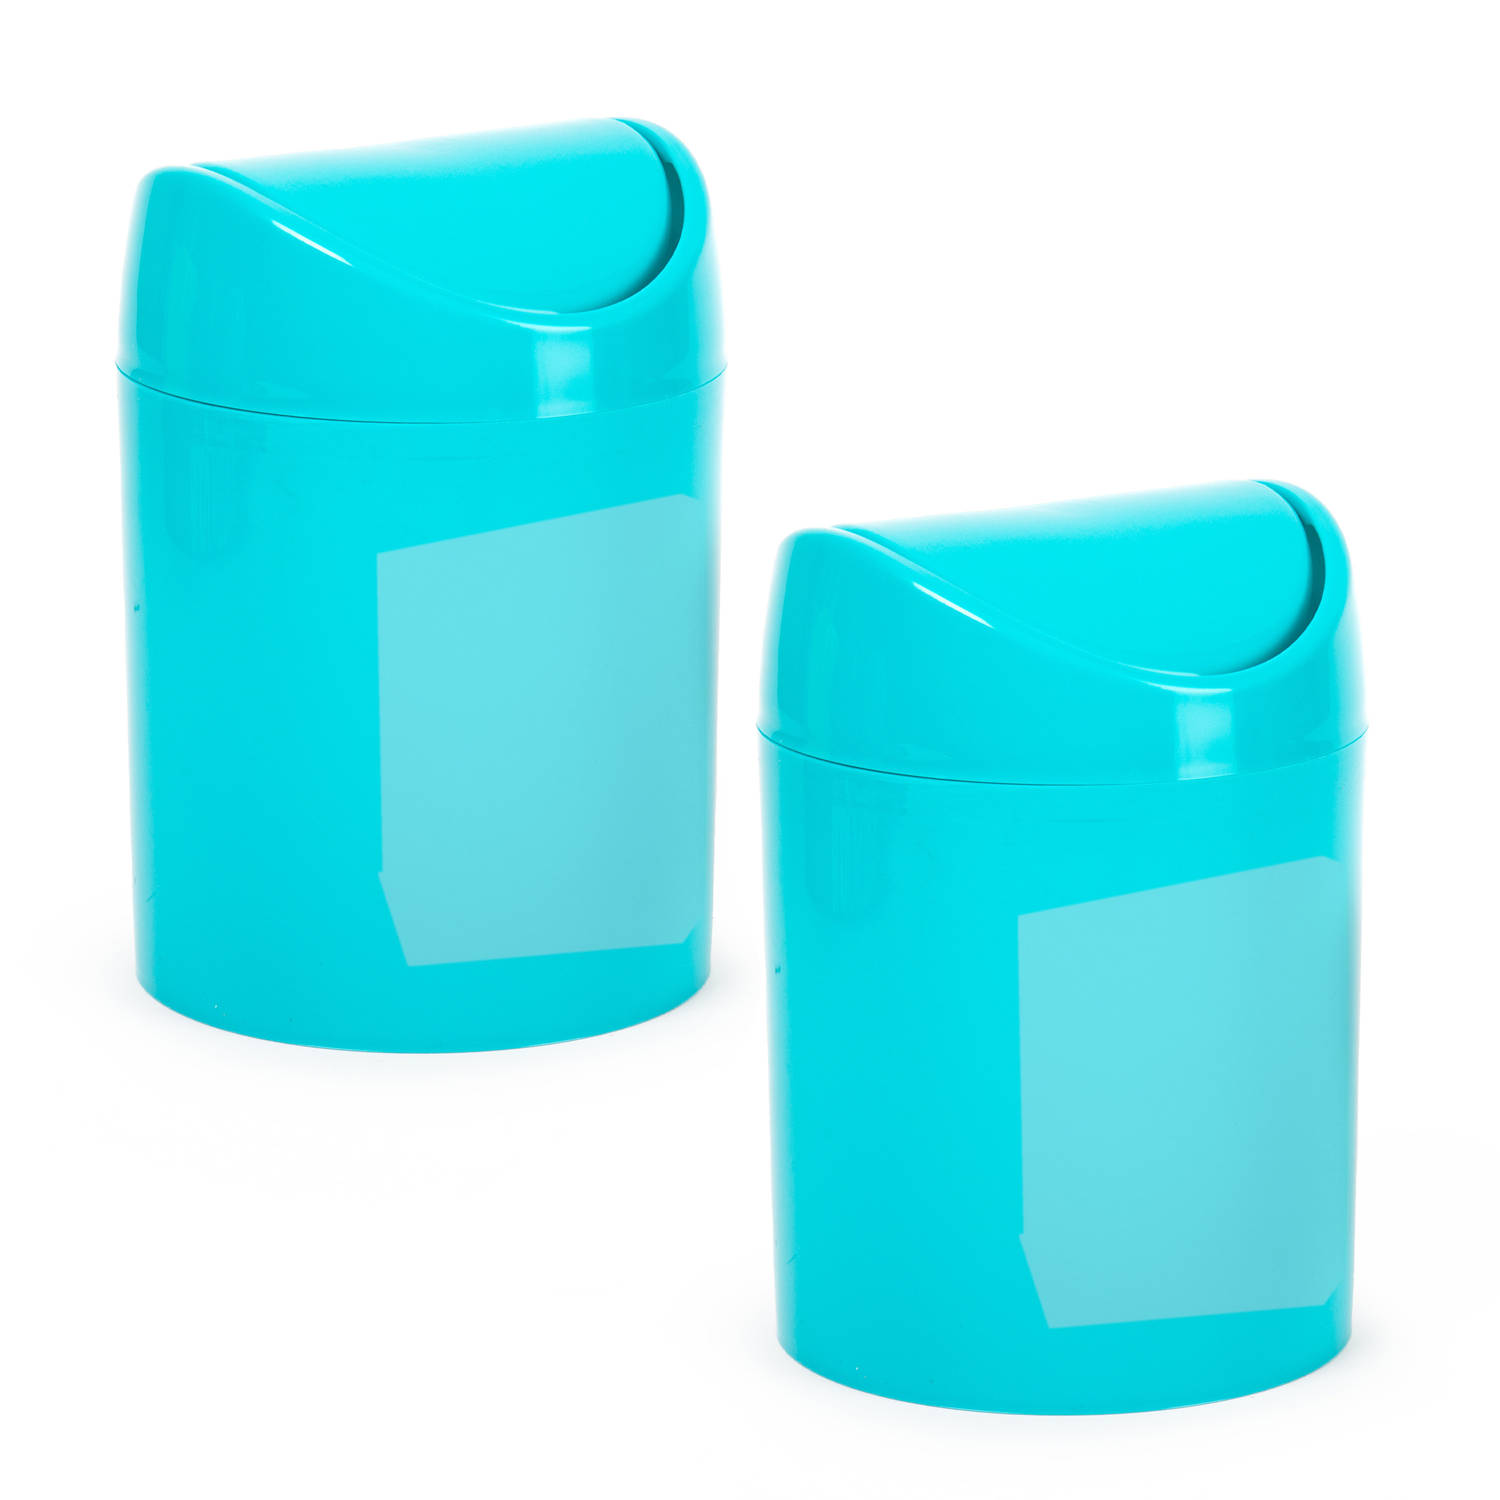 Plasticforte mini prullenbakje - 2x - blauw - kunststof - klepdeksel - keuken/aanrecht - 12 x 17 cm - Prullenbakken